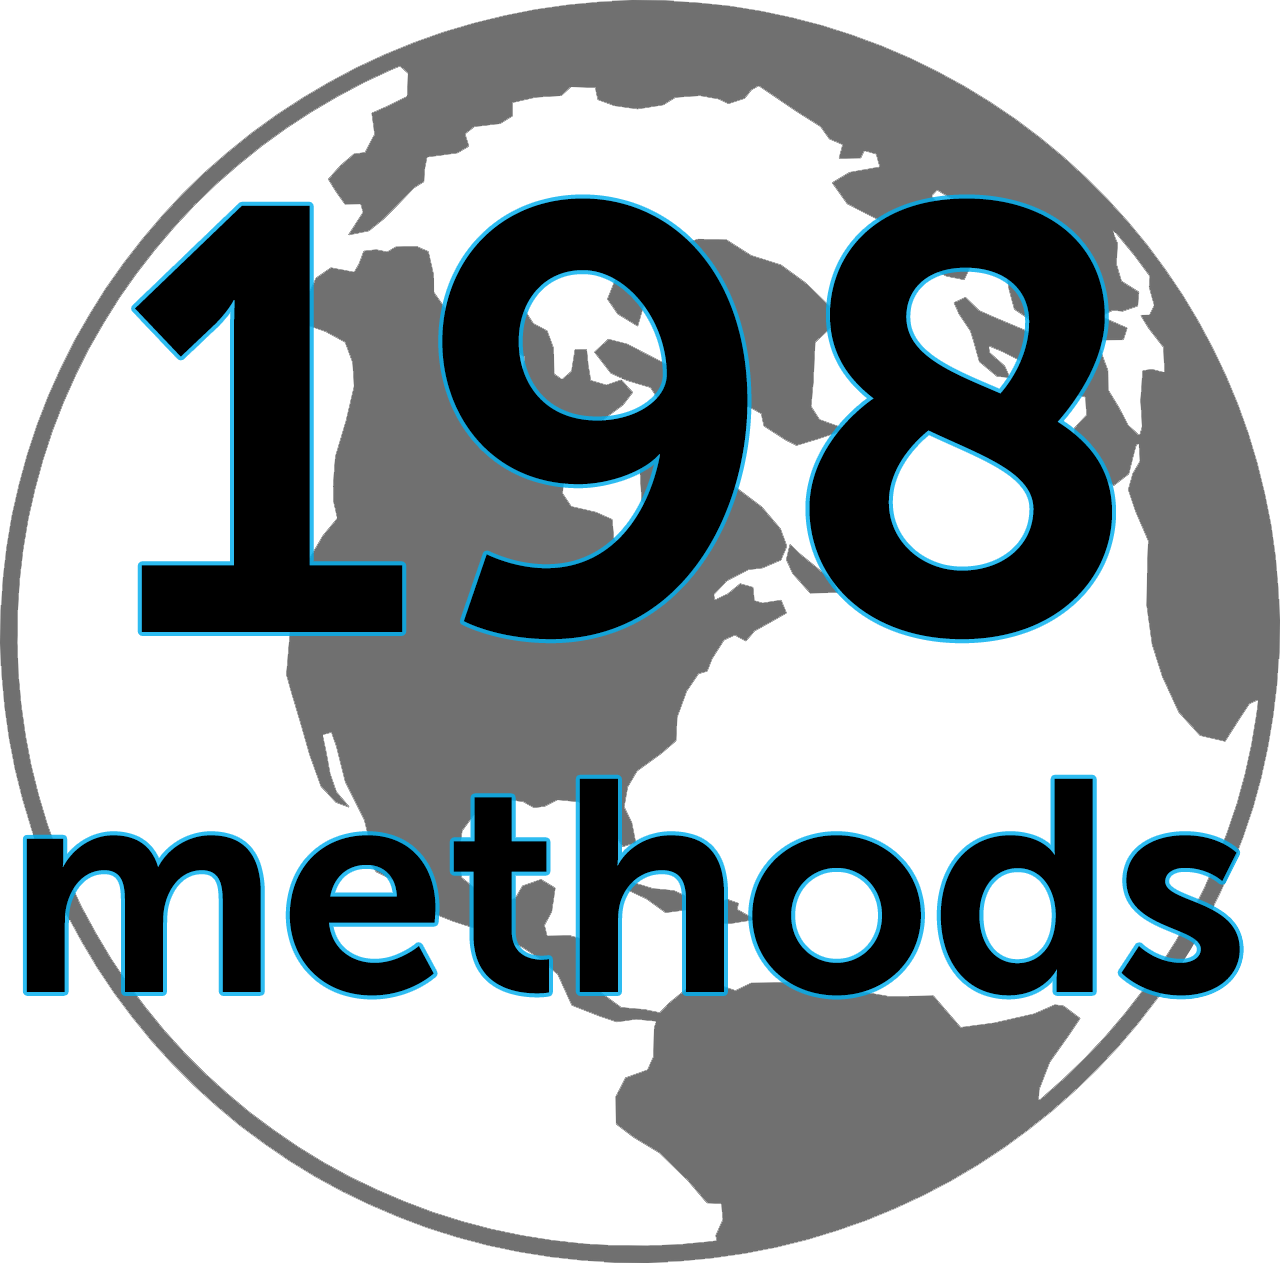 198 methods